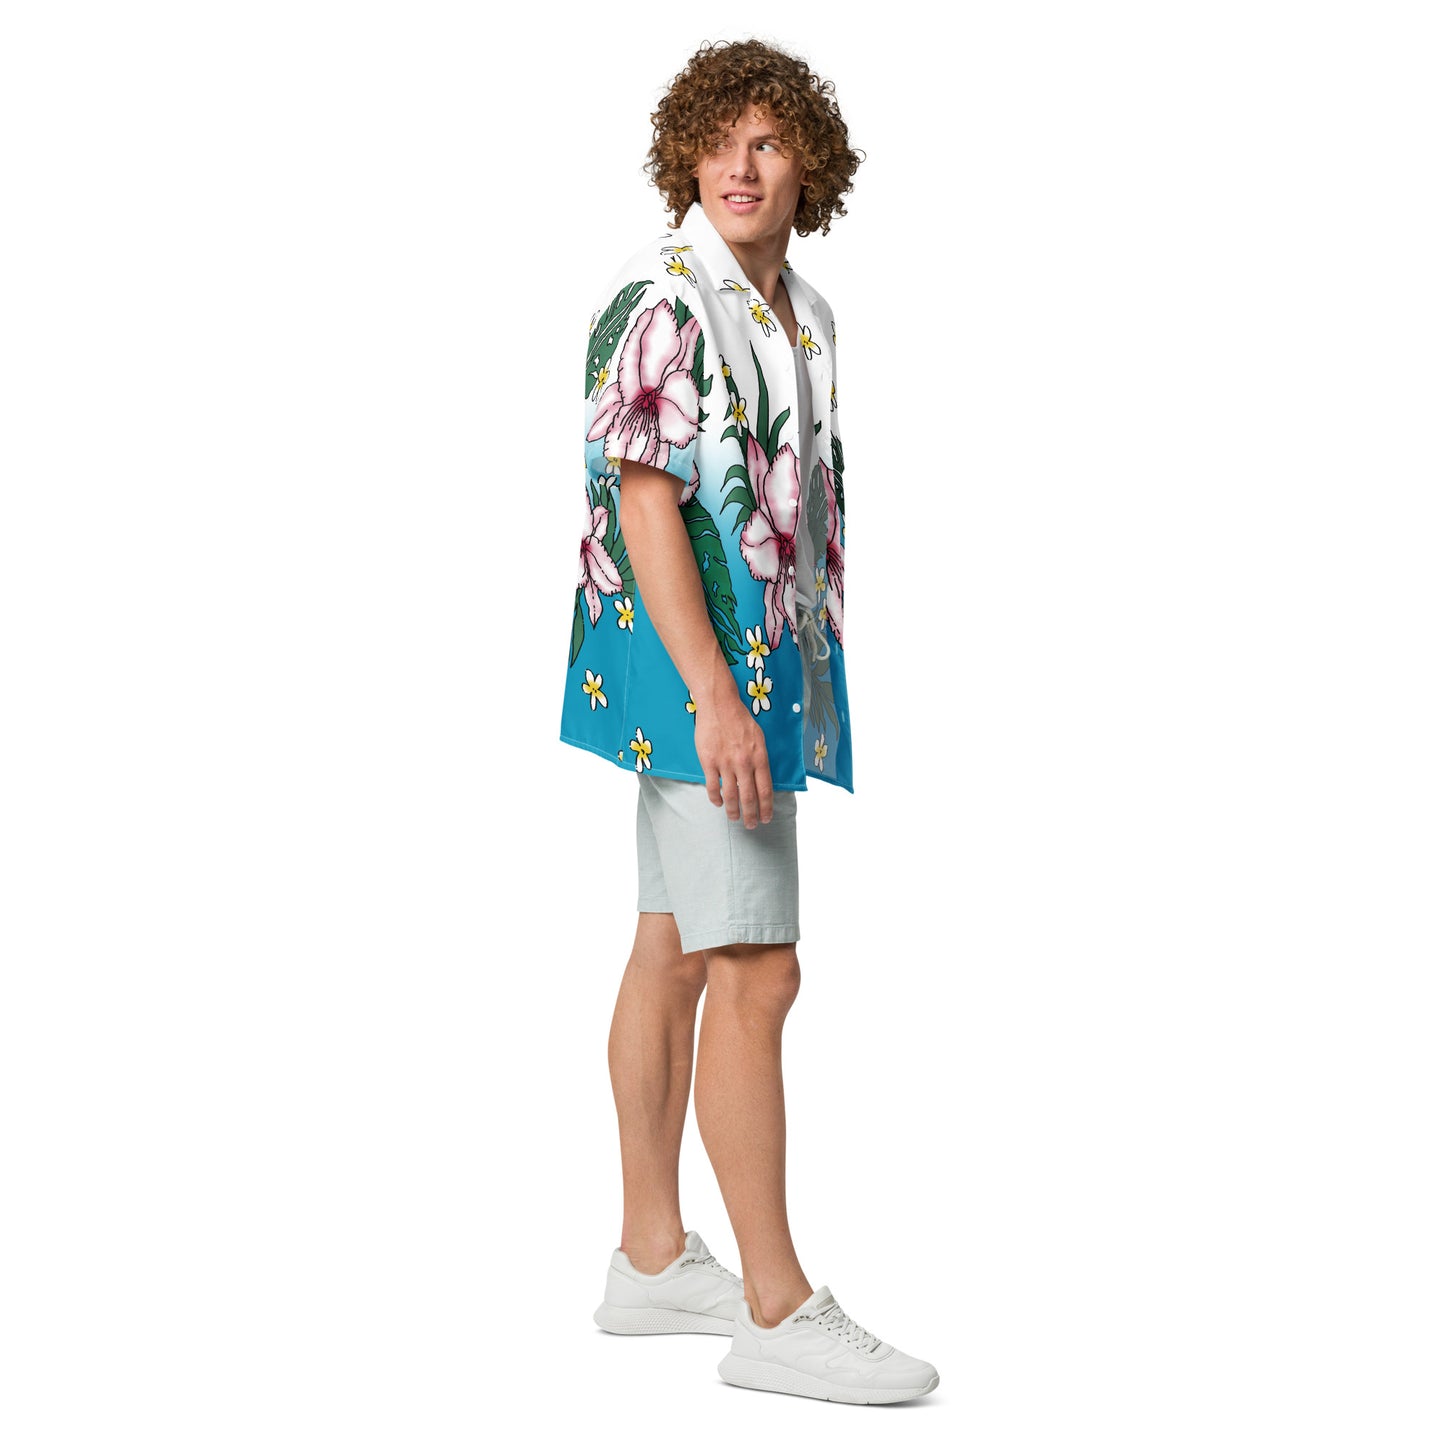 "Tropical Delight" Unisex Button Shirt